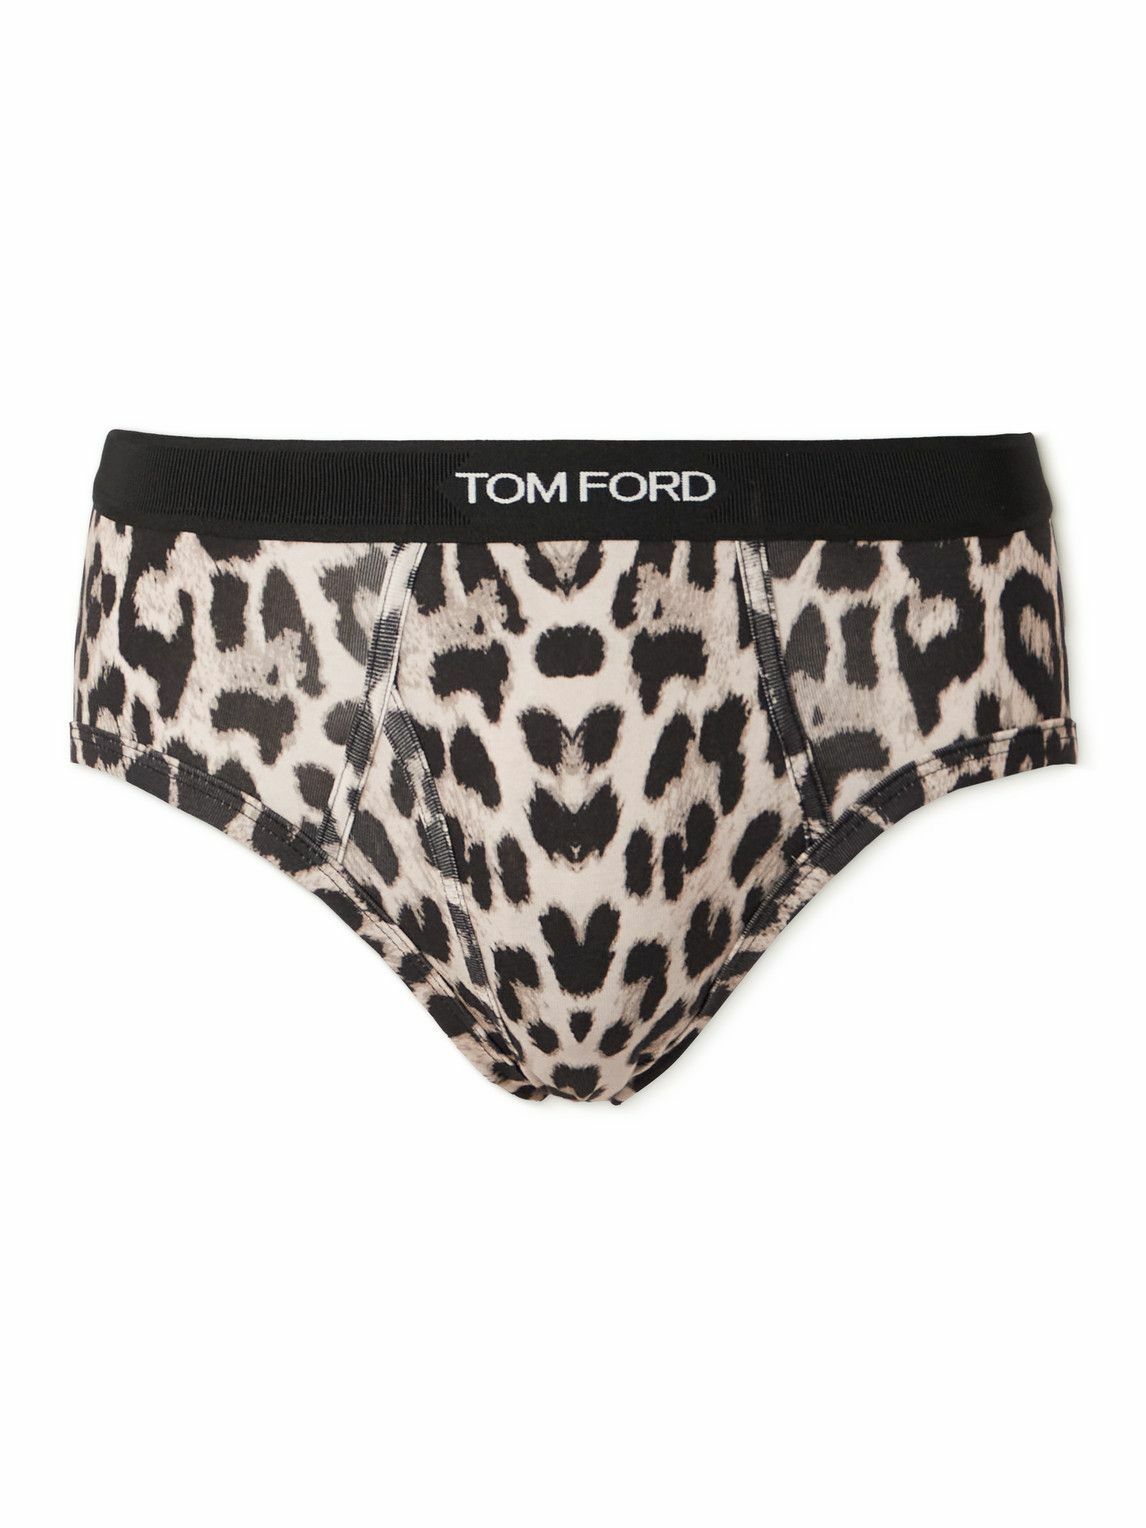 TOM FORD - Leopard-Print Stretch-Cotton Jersey Briefs - Animal print ...